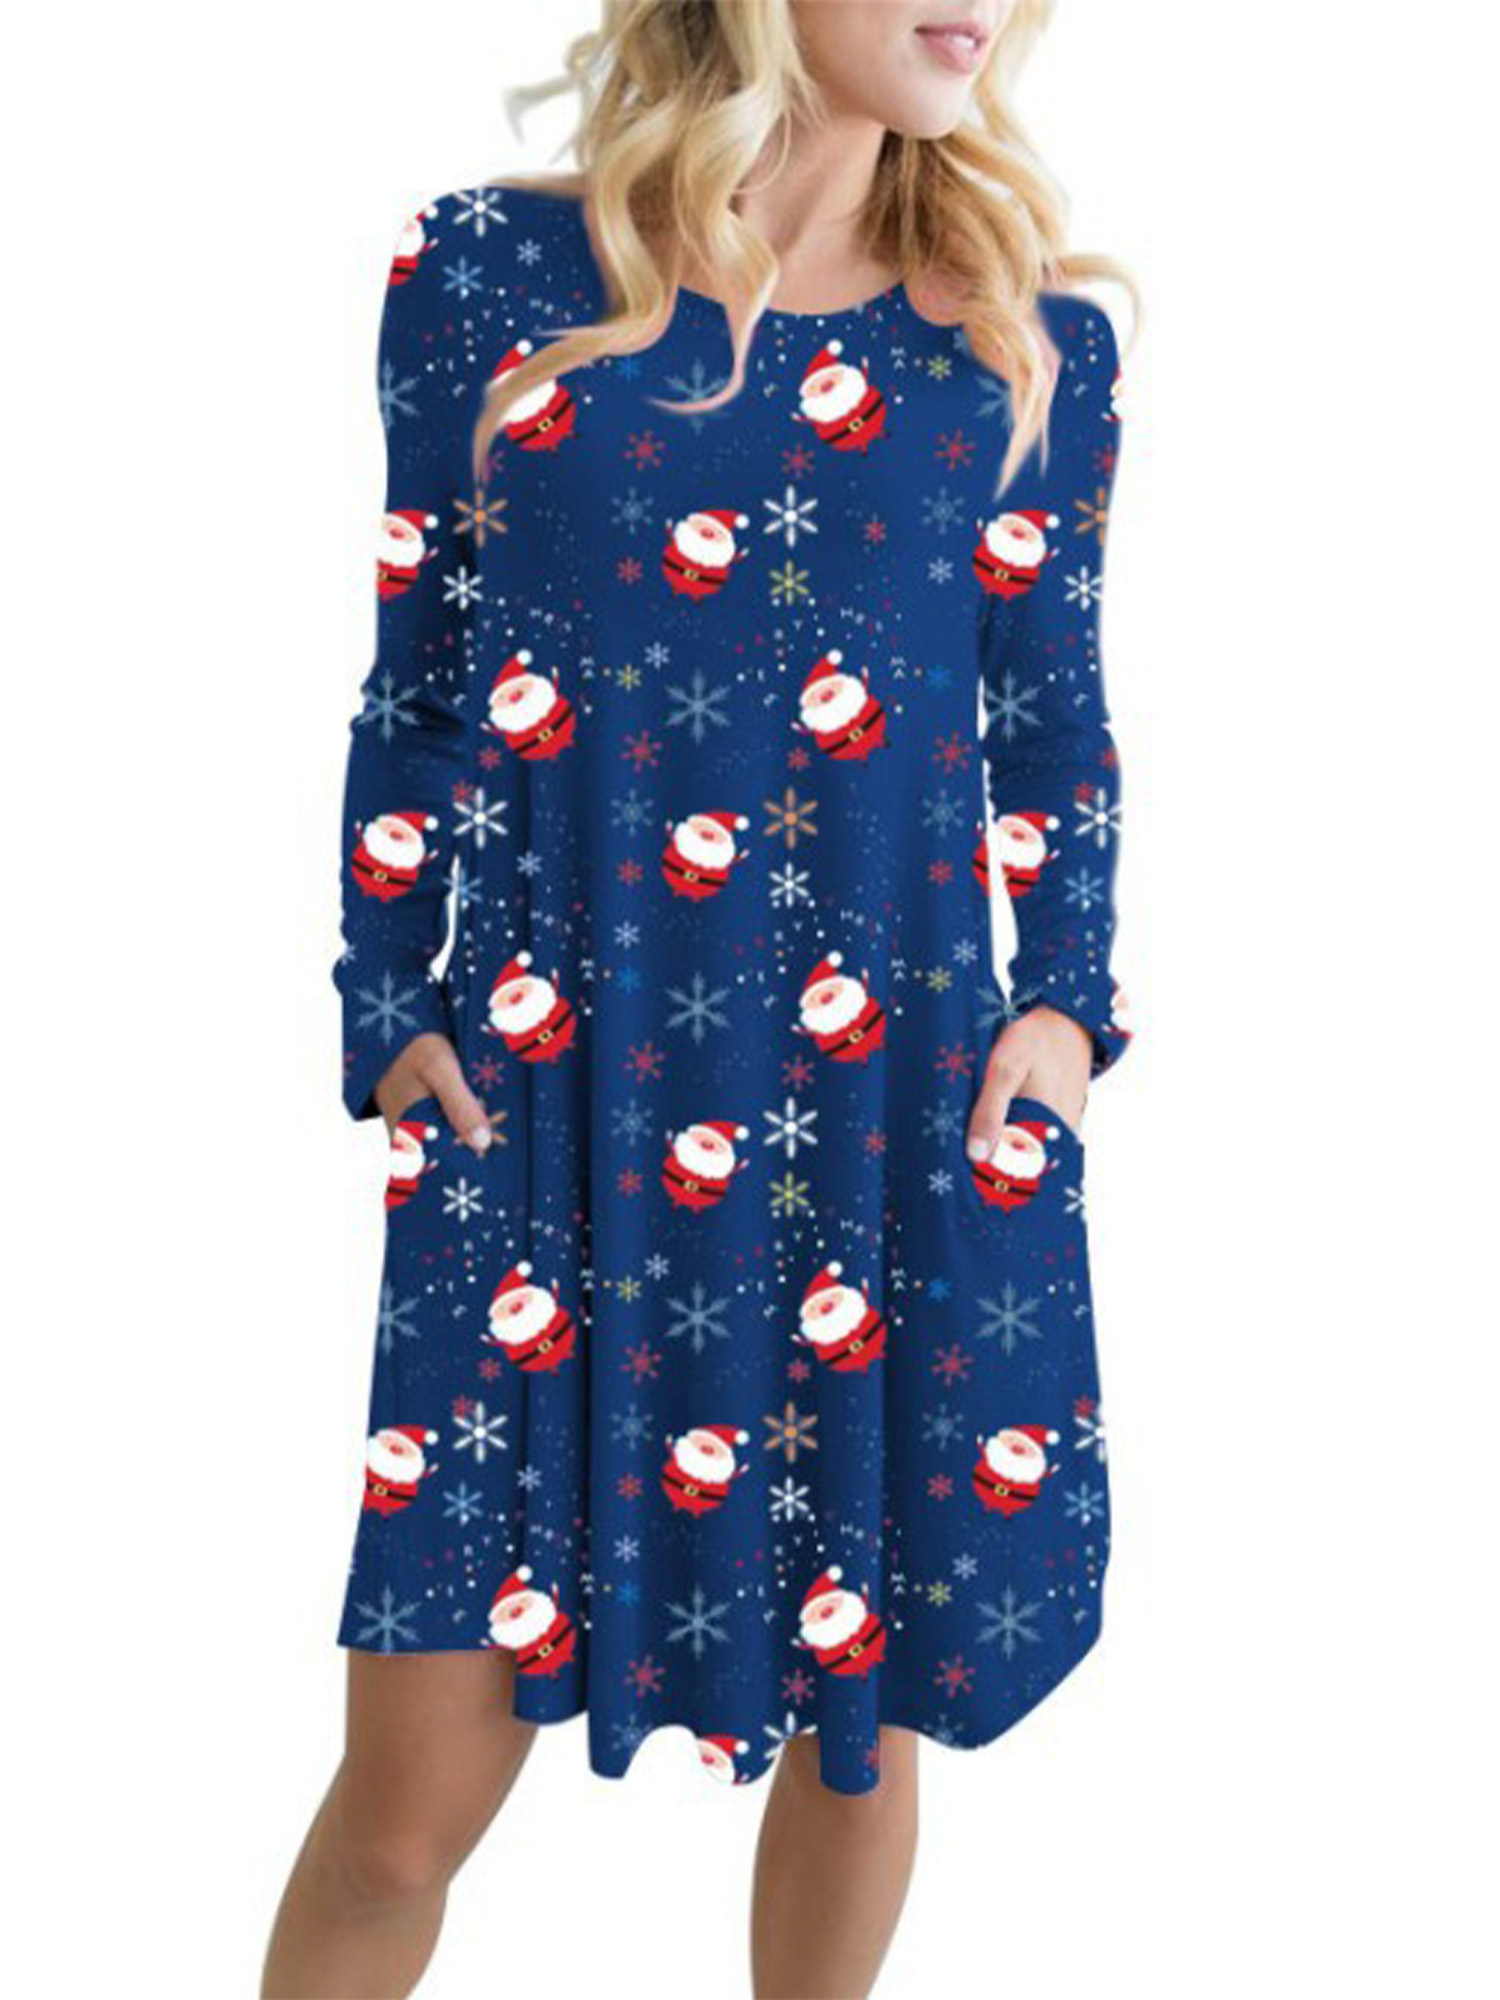 UKAP Women's Plus Size Loose Christmas Long Sleeve Midi Dress Lady's Xmas Cute Snowman Printed Dress Casual Shift Holiday Pleated Pockets Dresses - image 1 of 2